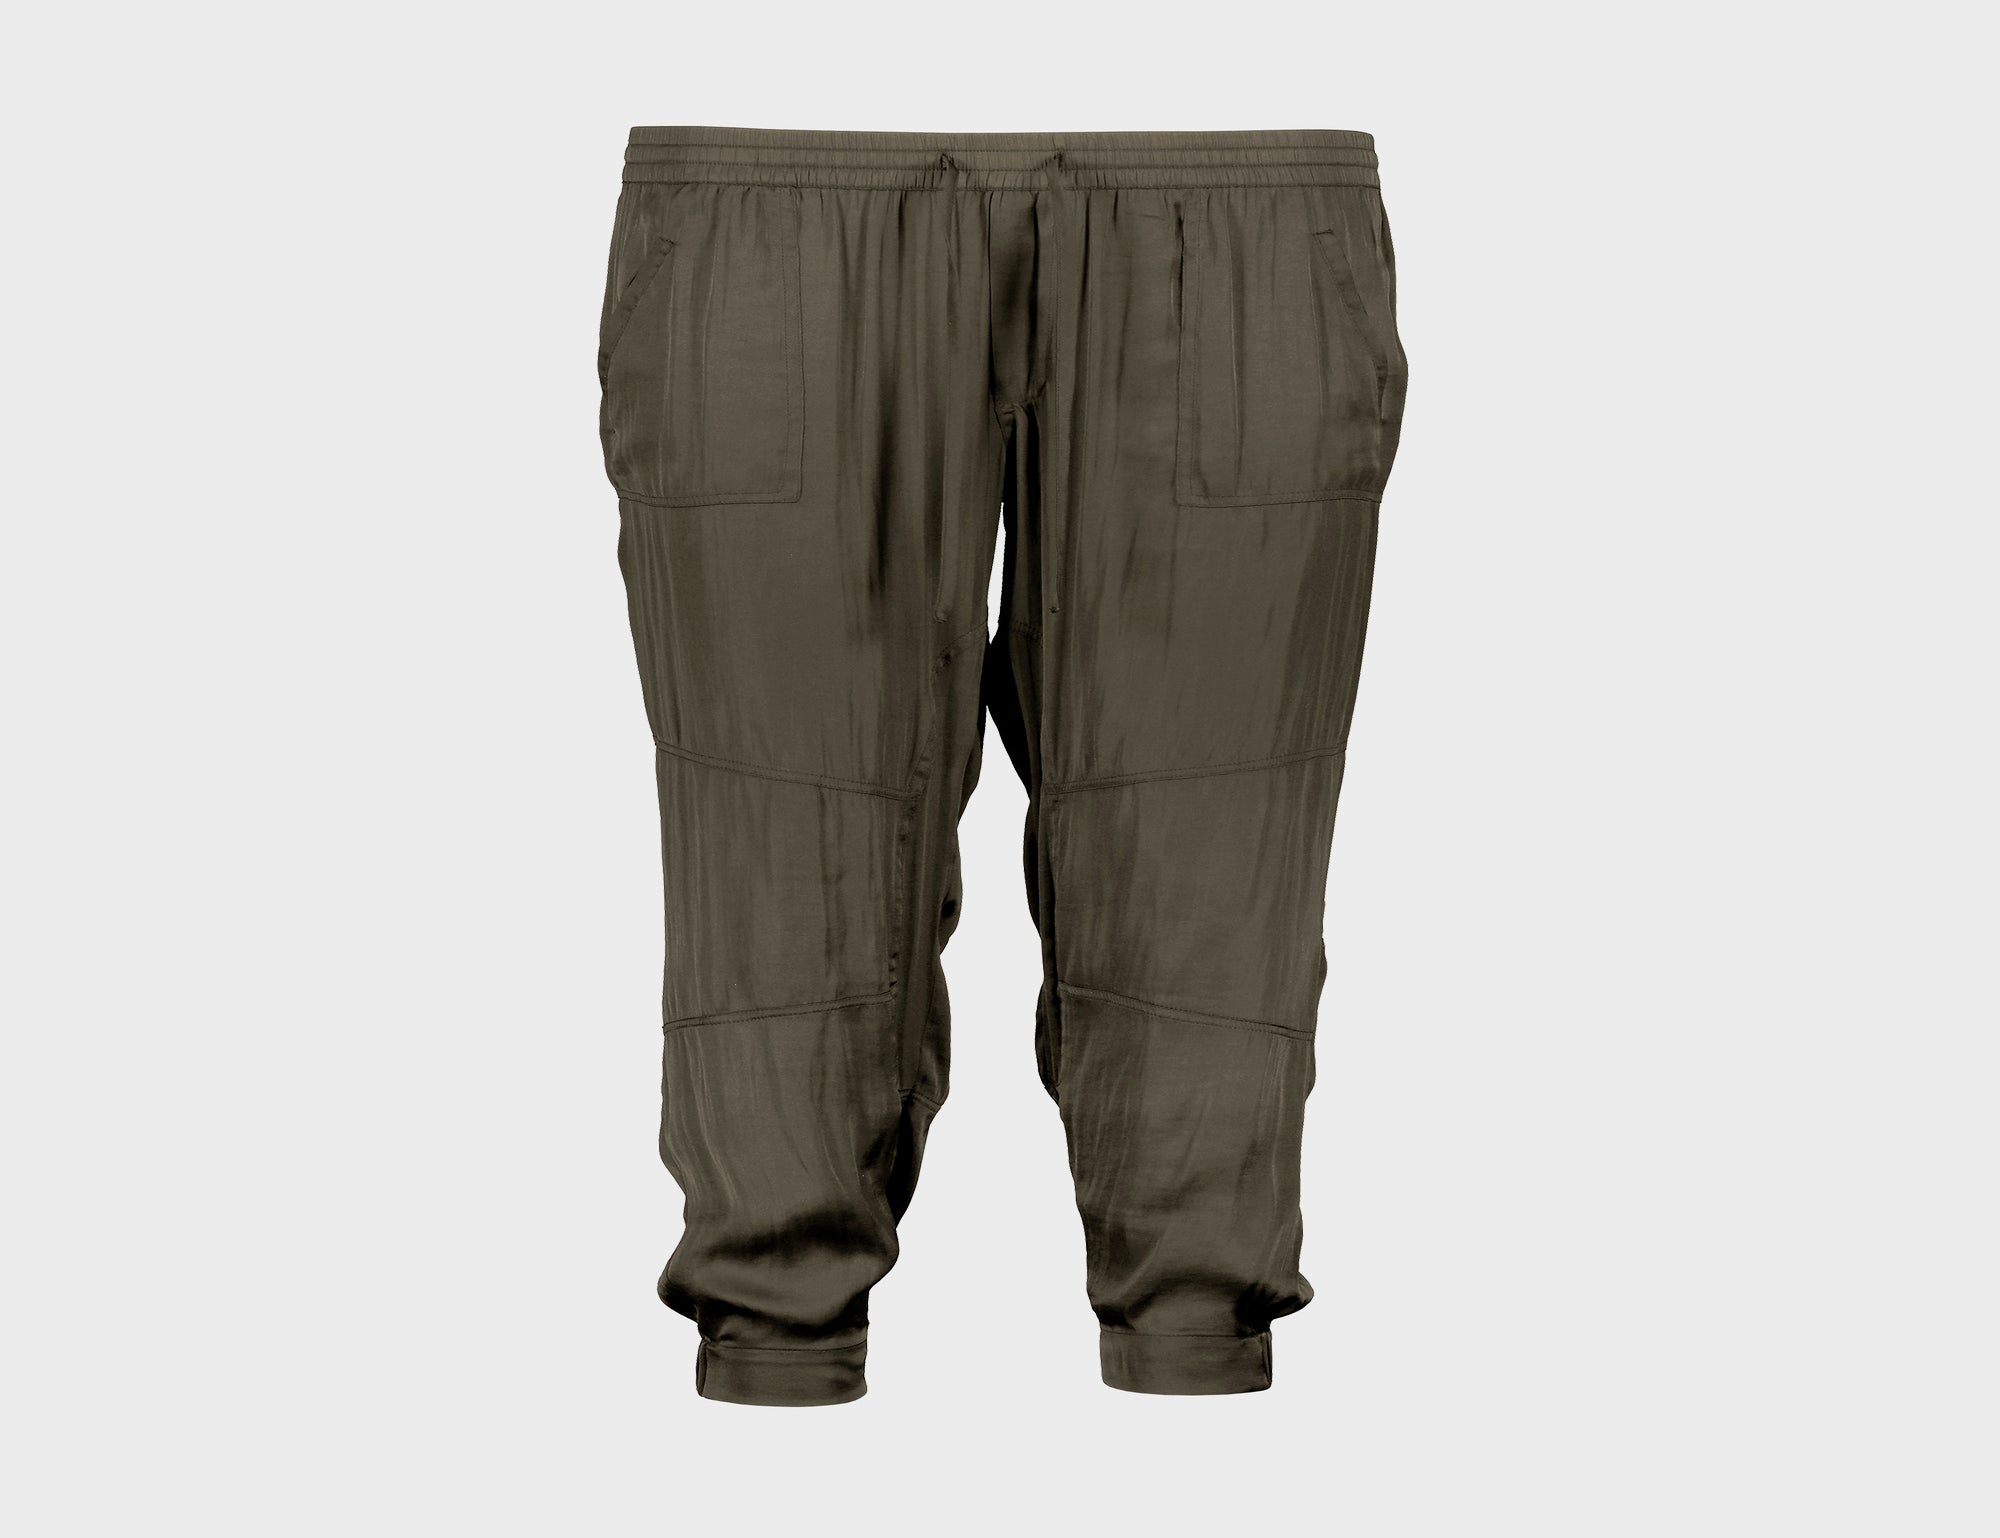 Slouch Satin Pant - Green - Pants - Full Length - Women's Clothing - Storm